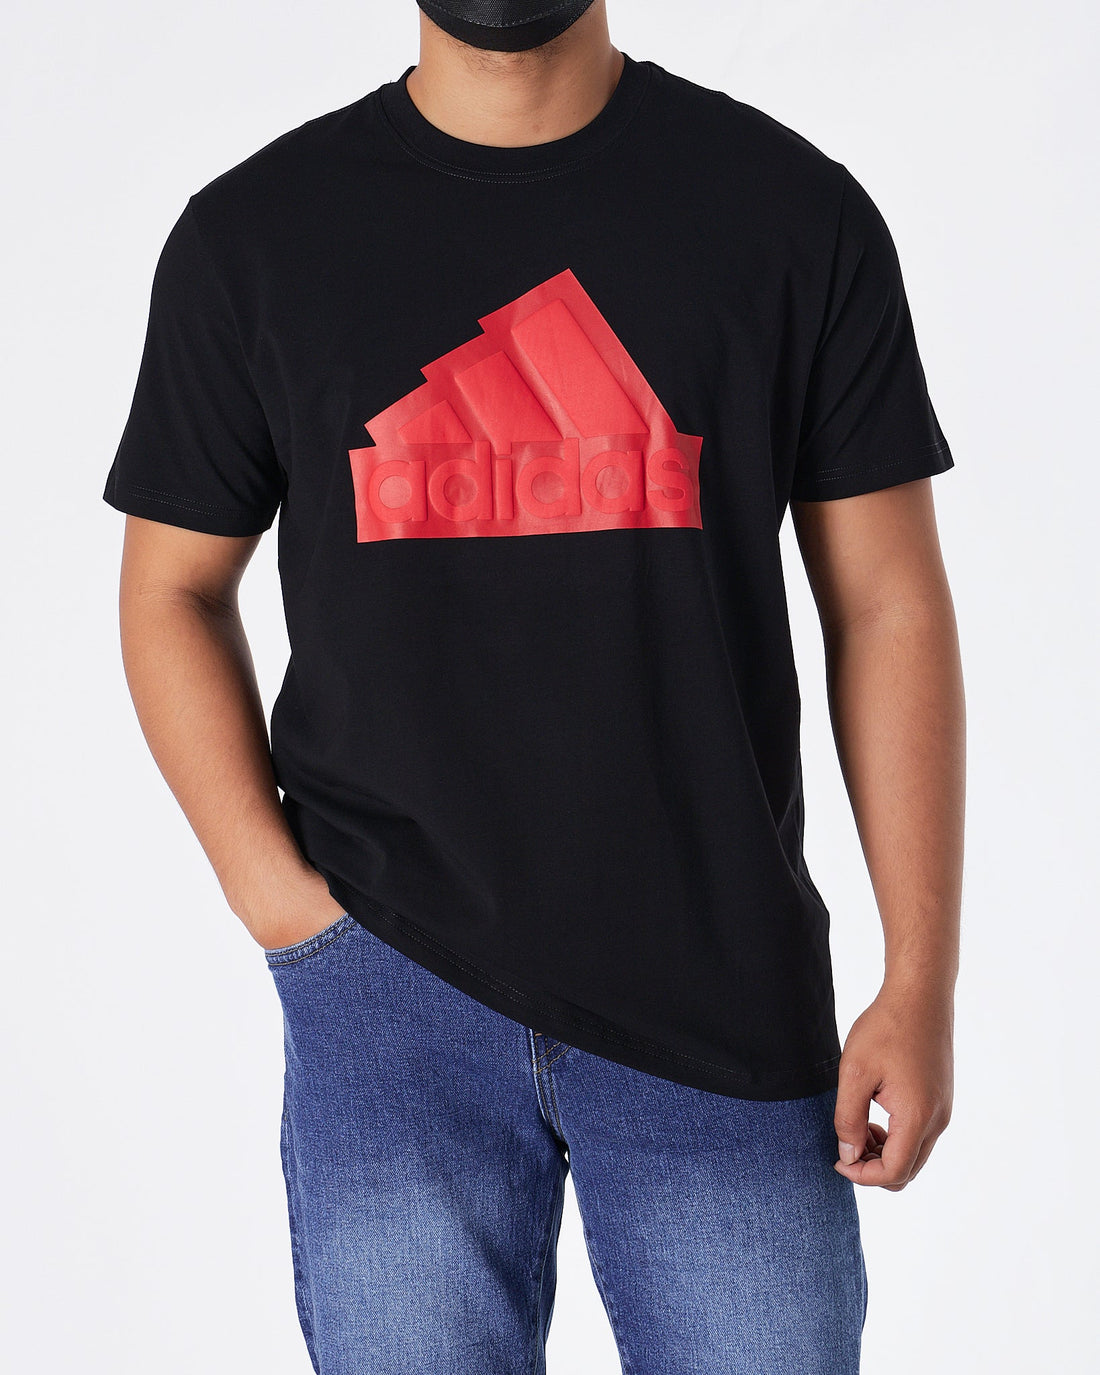 MOI OUTFIT-AD Emboss Men Black T-Shirt 16.90